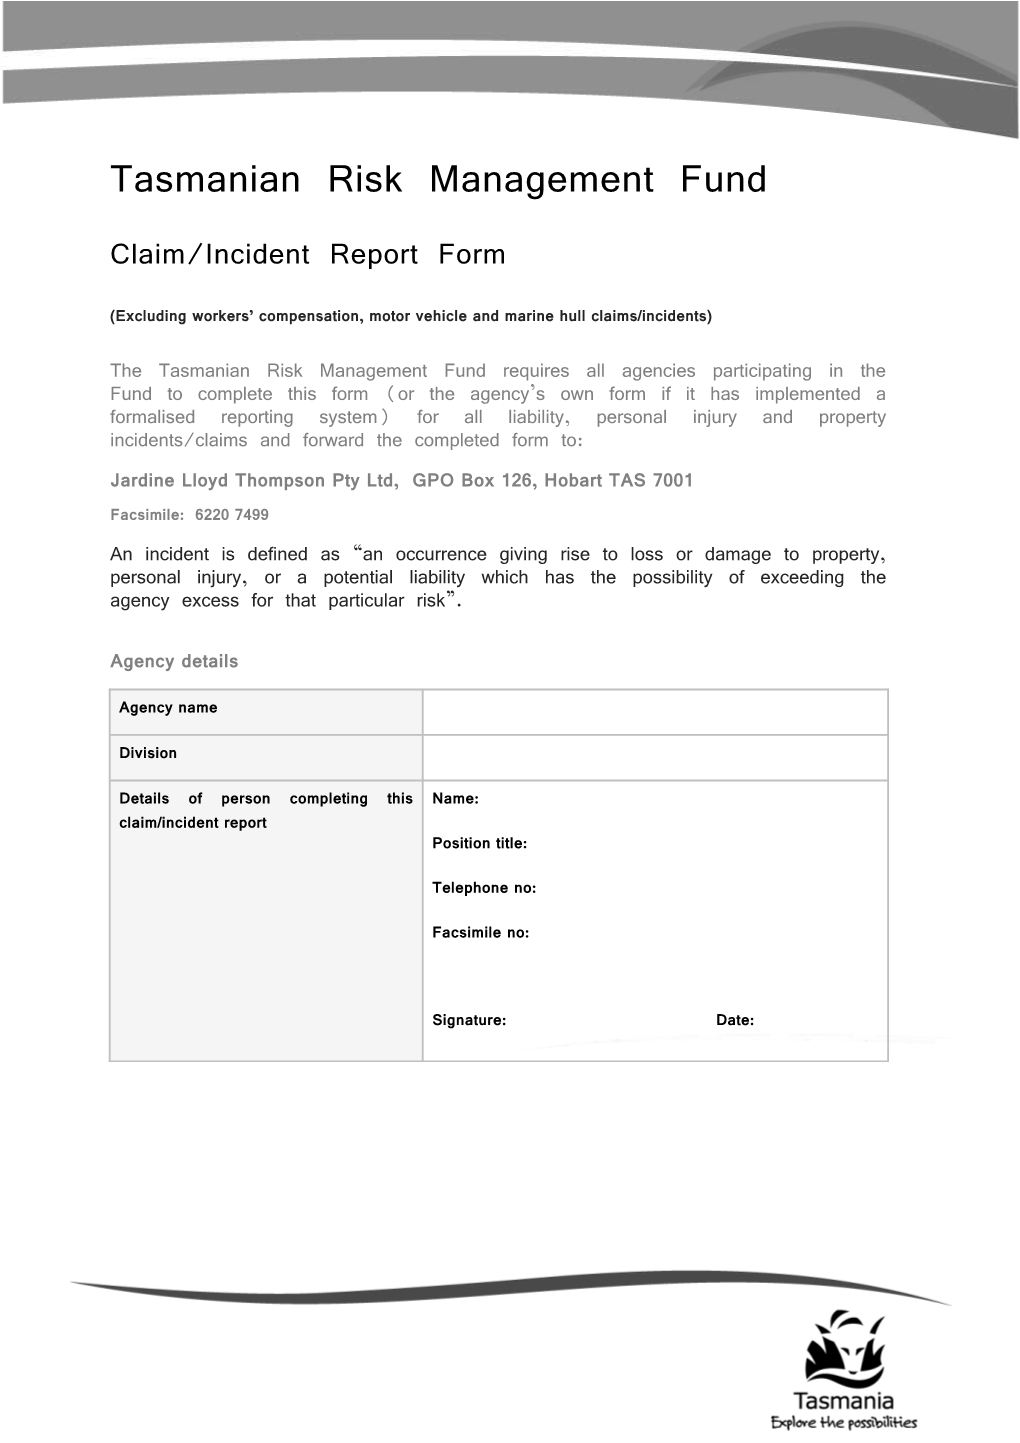 TRMF Claim Incident Report Form